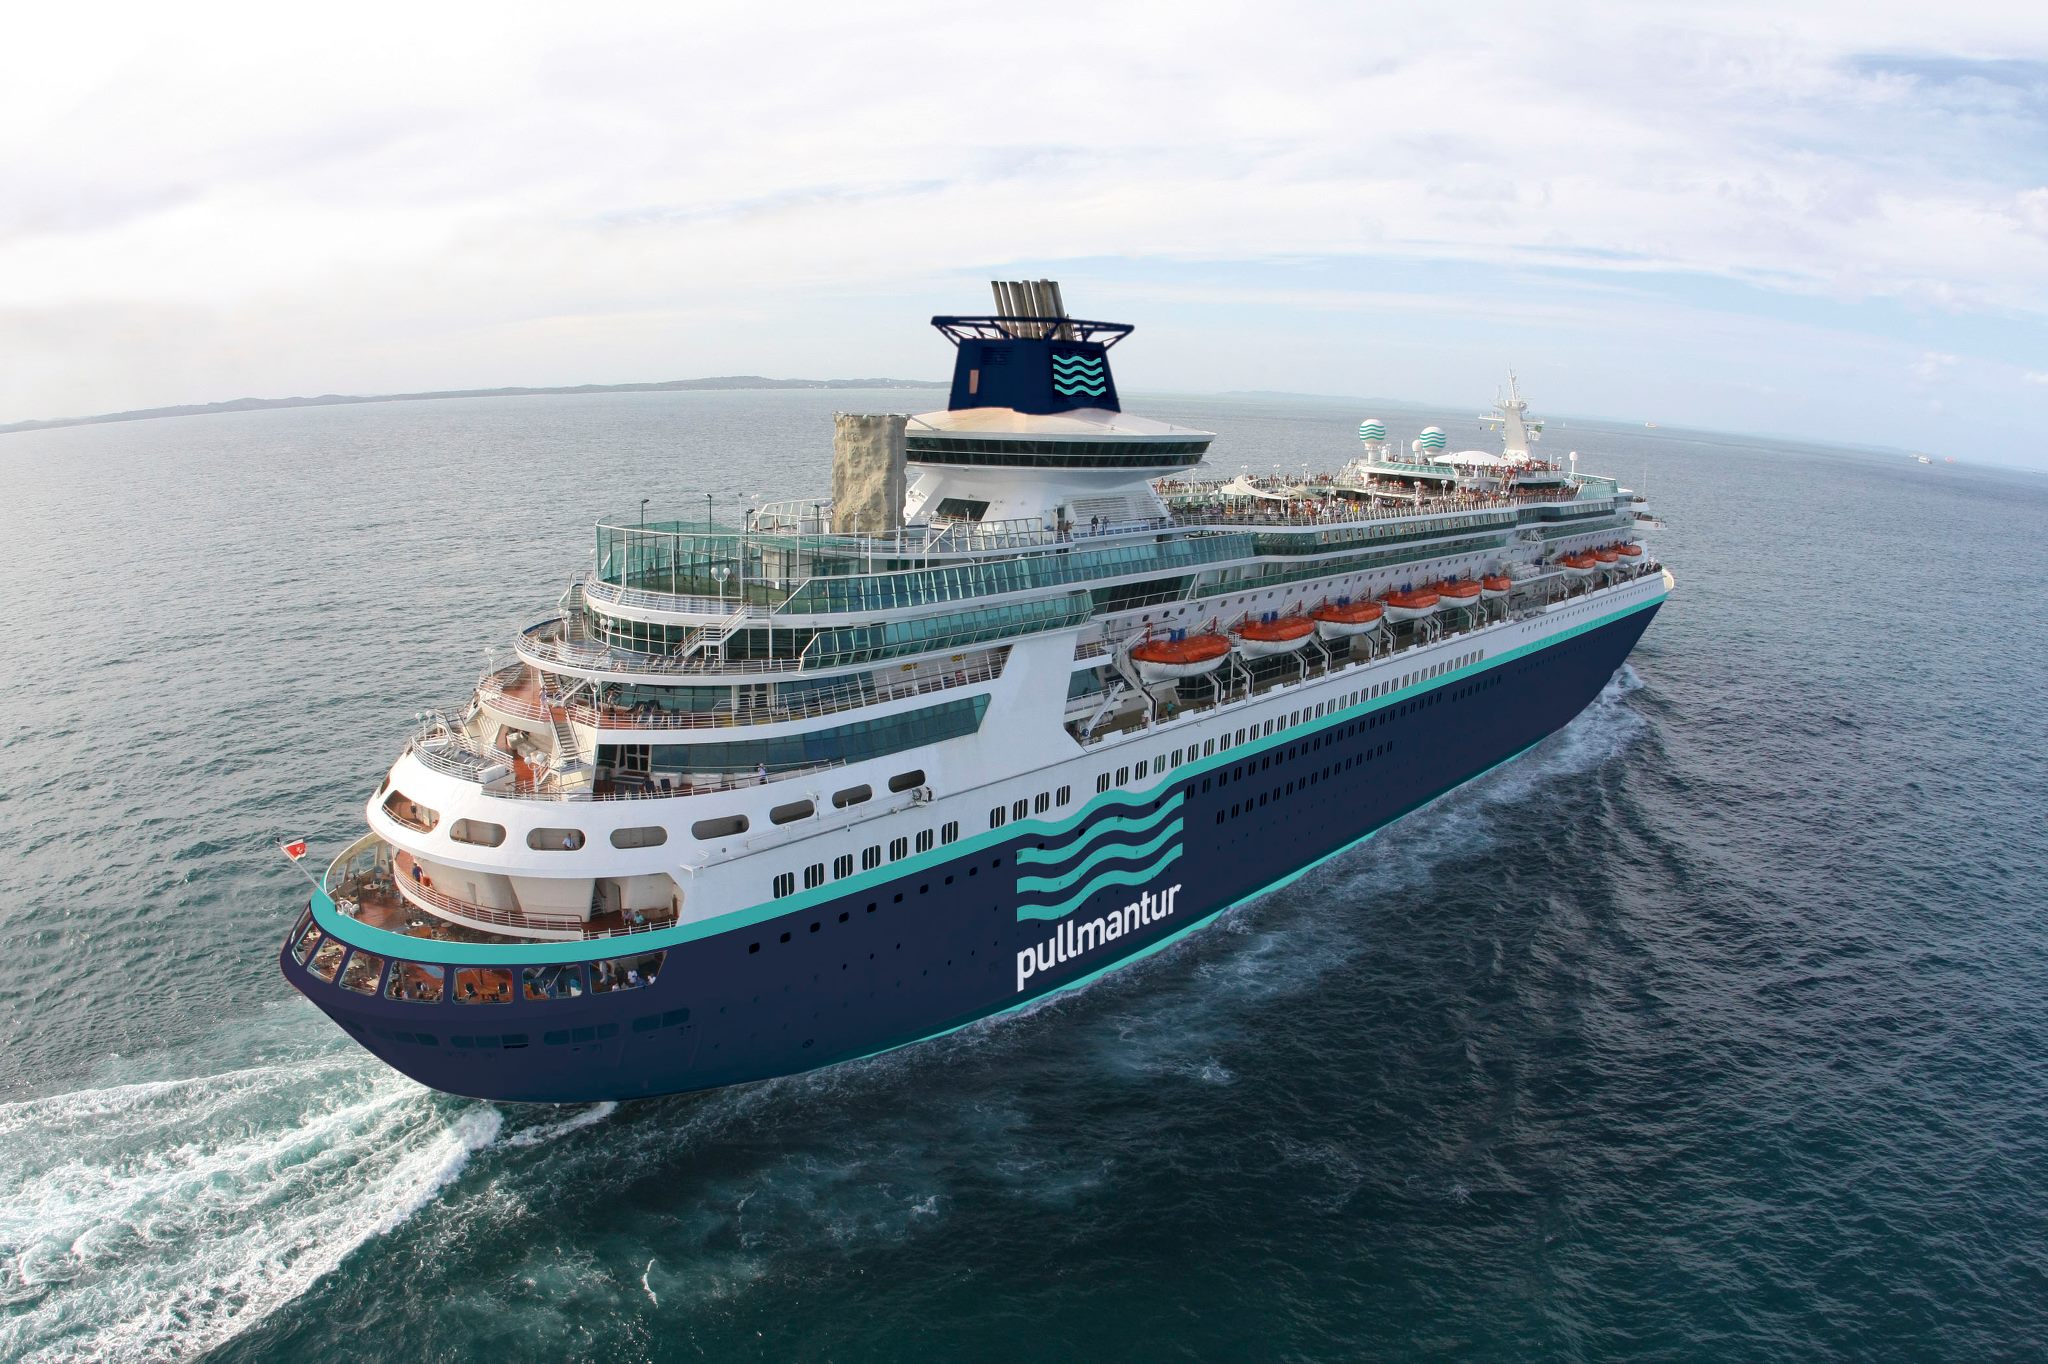 Migración llega a acuerdo con empresa de cruceros para recibir turistas en Limón